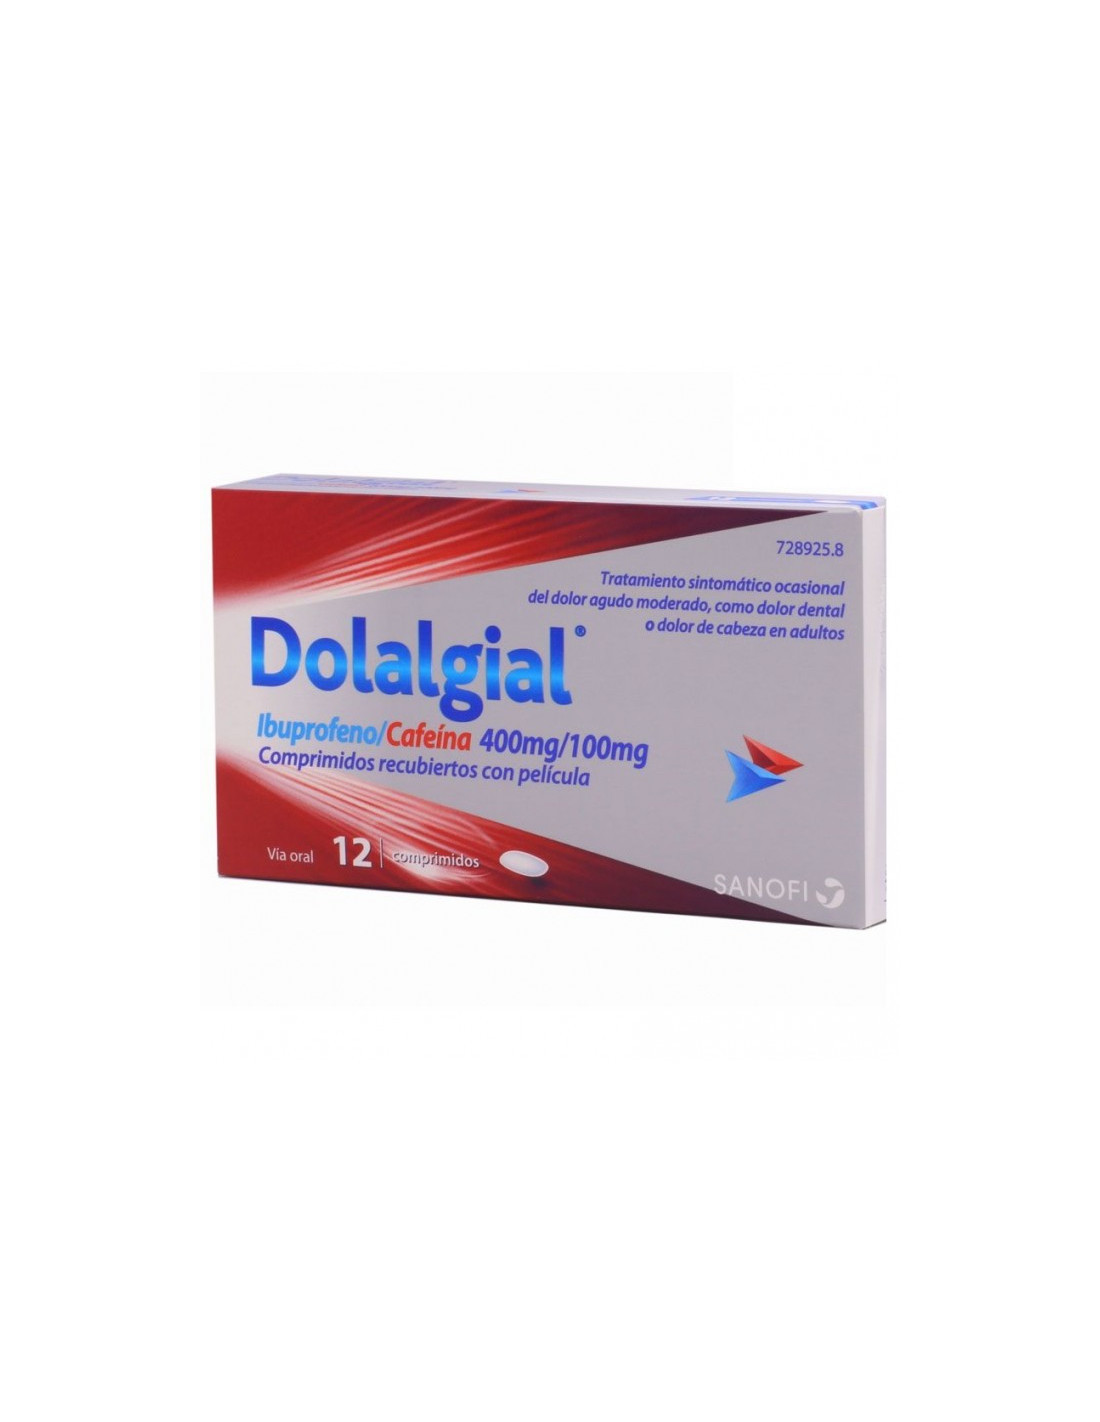 Dolalgial ibuprofeno/cafeína 400mg/100mg 12 comprimidos - Farmacia Martínez  Salazar